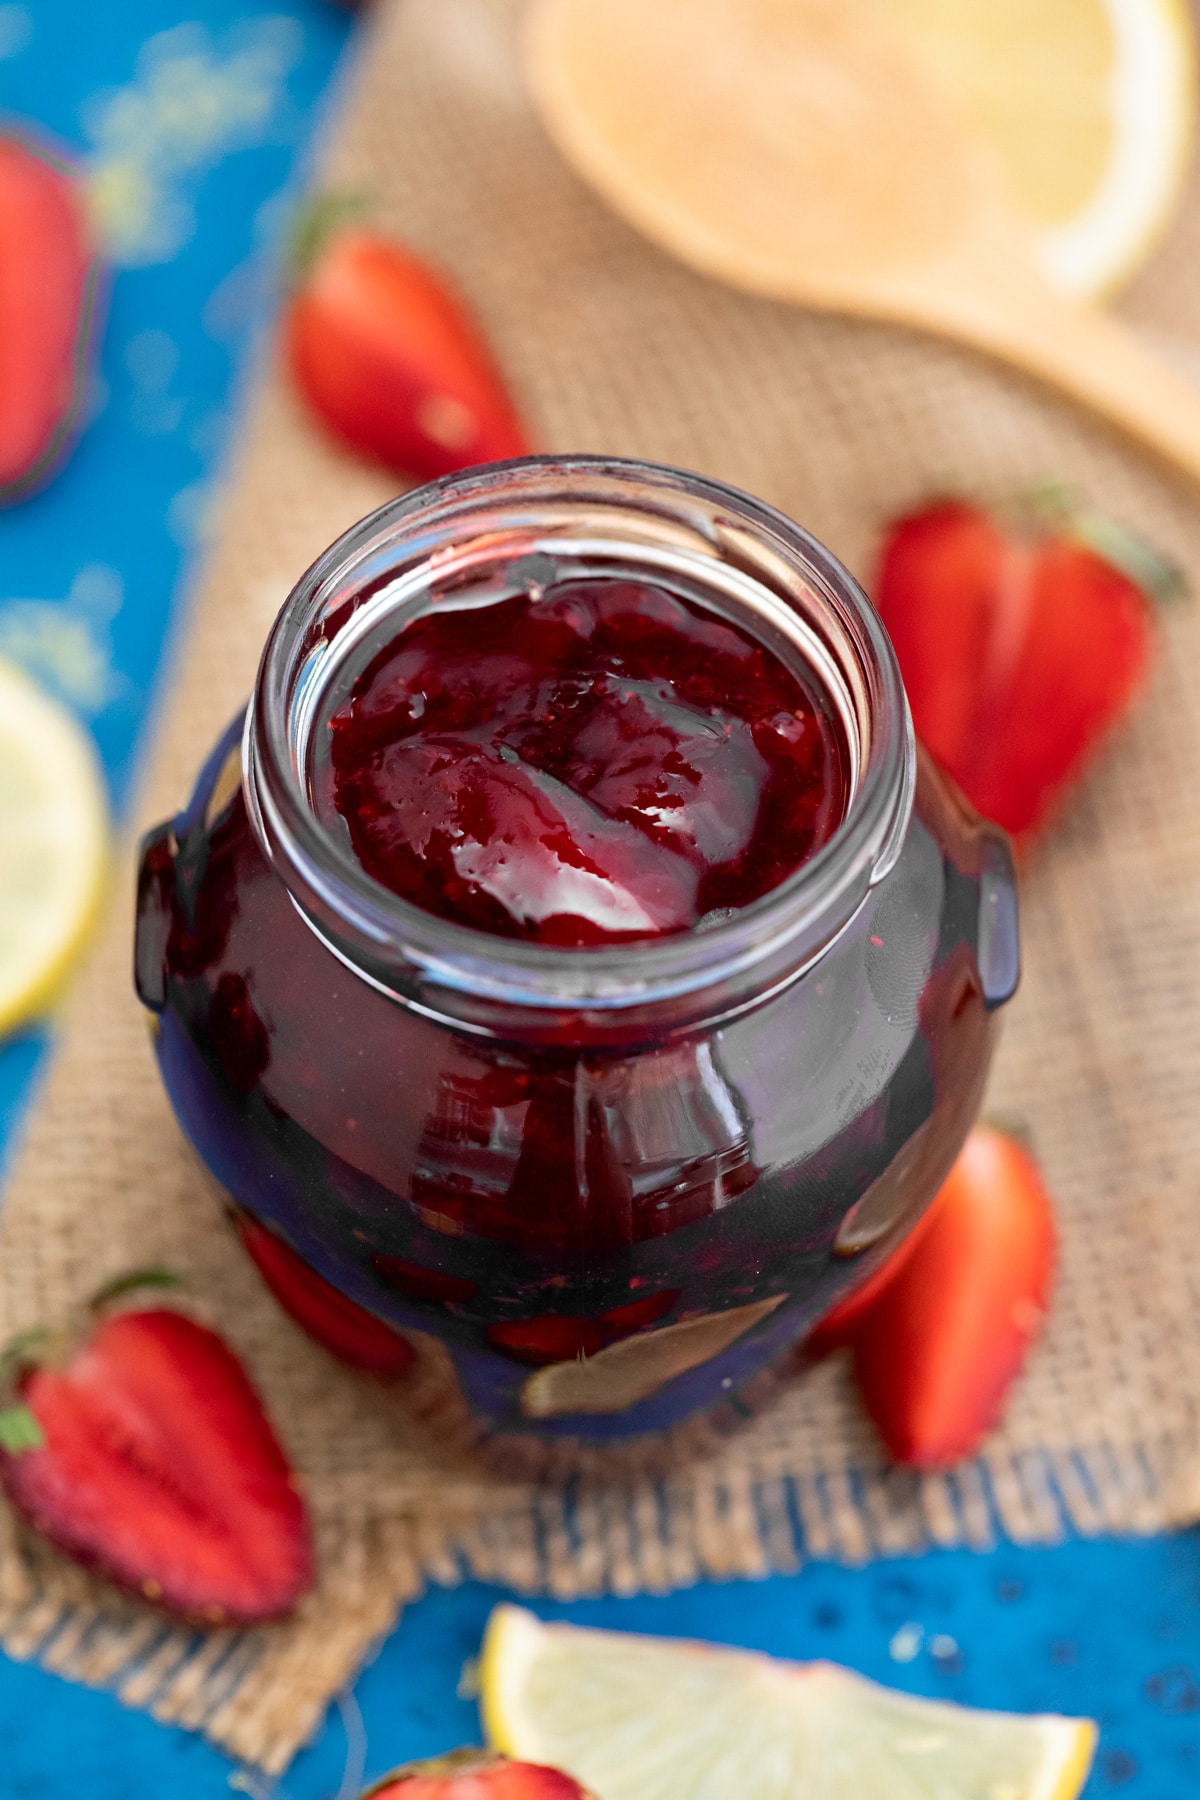 Pear shaped jam jar with strawberry jam on burlap and blue napkins 